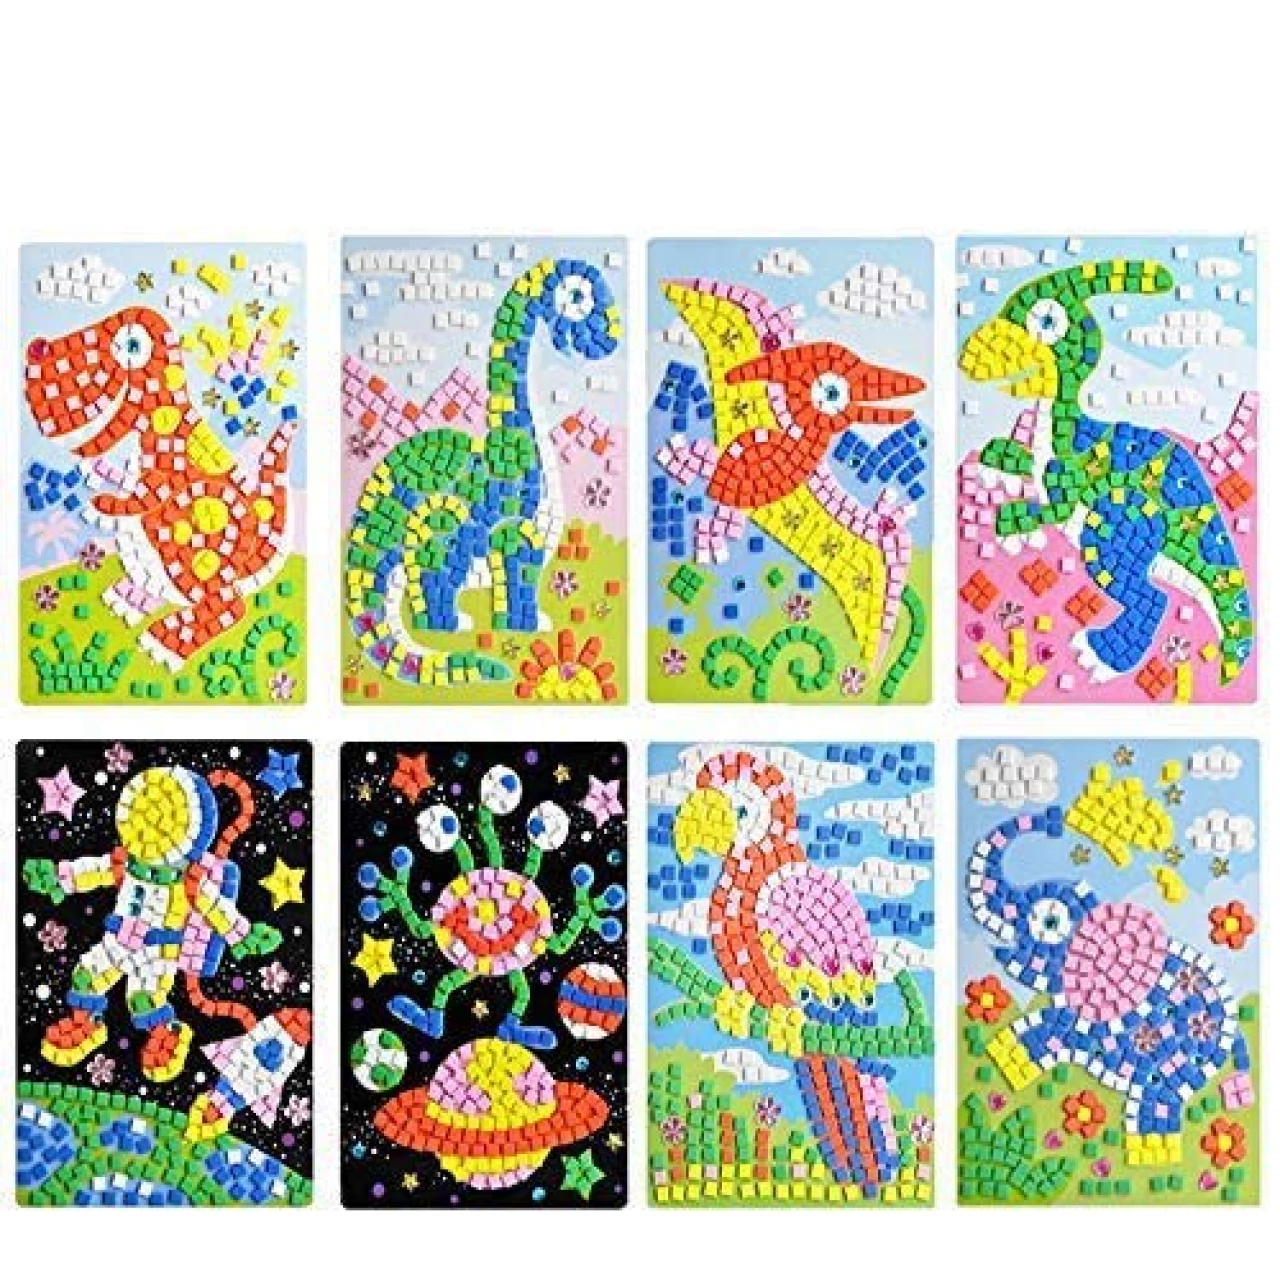 CCINEE Mosaic Sticker DIY Handmade Art Crafts Kits Christmas New Year Gifts for Kids Elephant Parrot Astronaut Dinosaurs 8 Packs